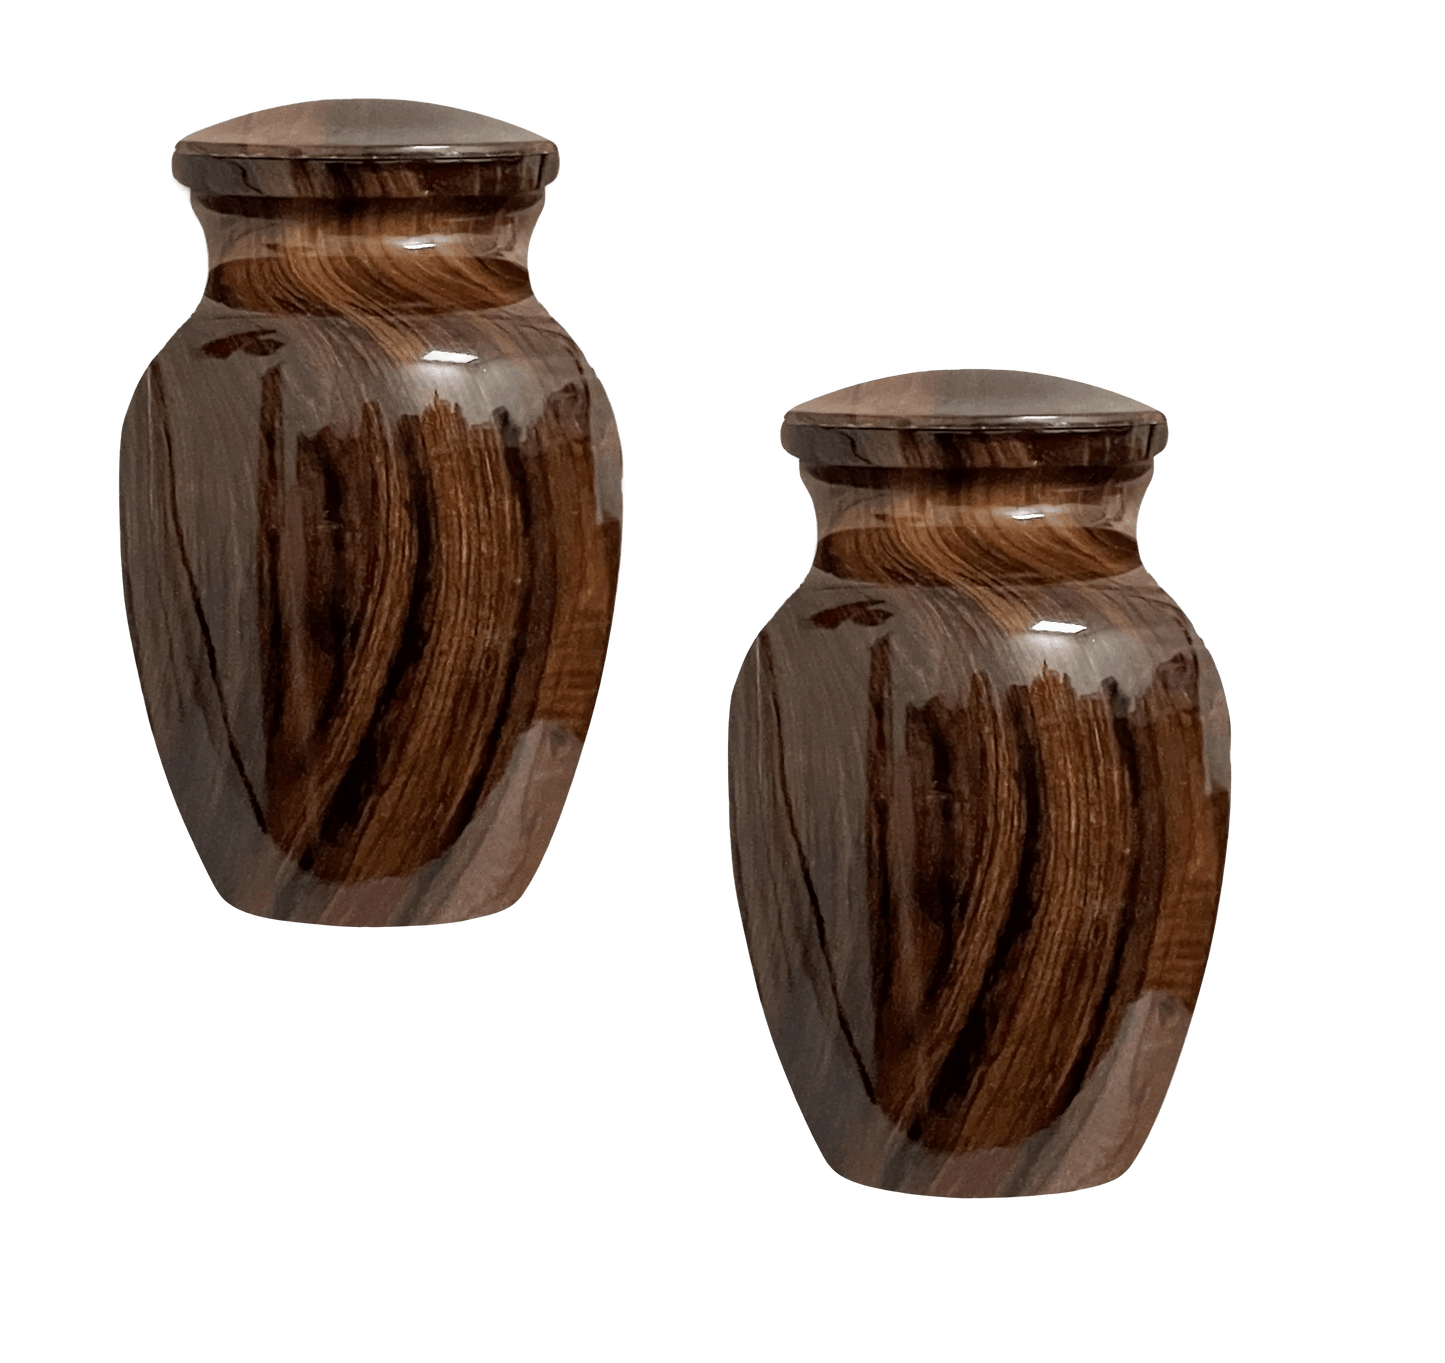 Pair of Keepsake Urns - Brazilian Rosewood | Hydro-Painted Keepsake Urns